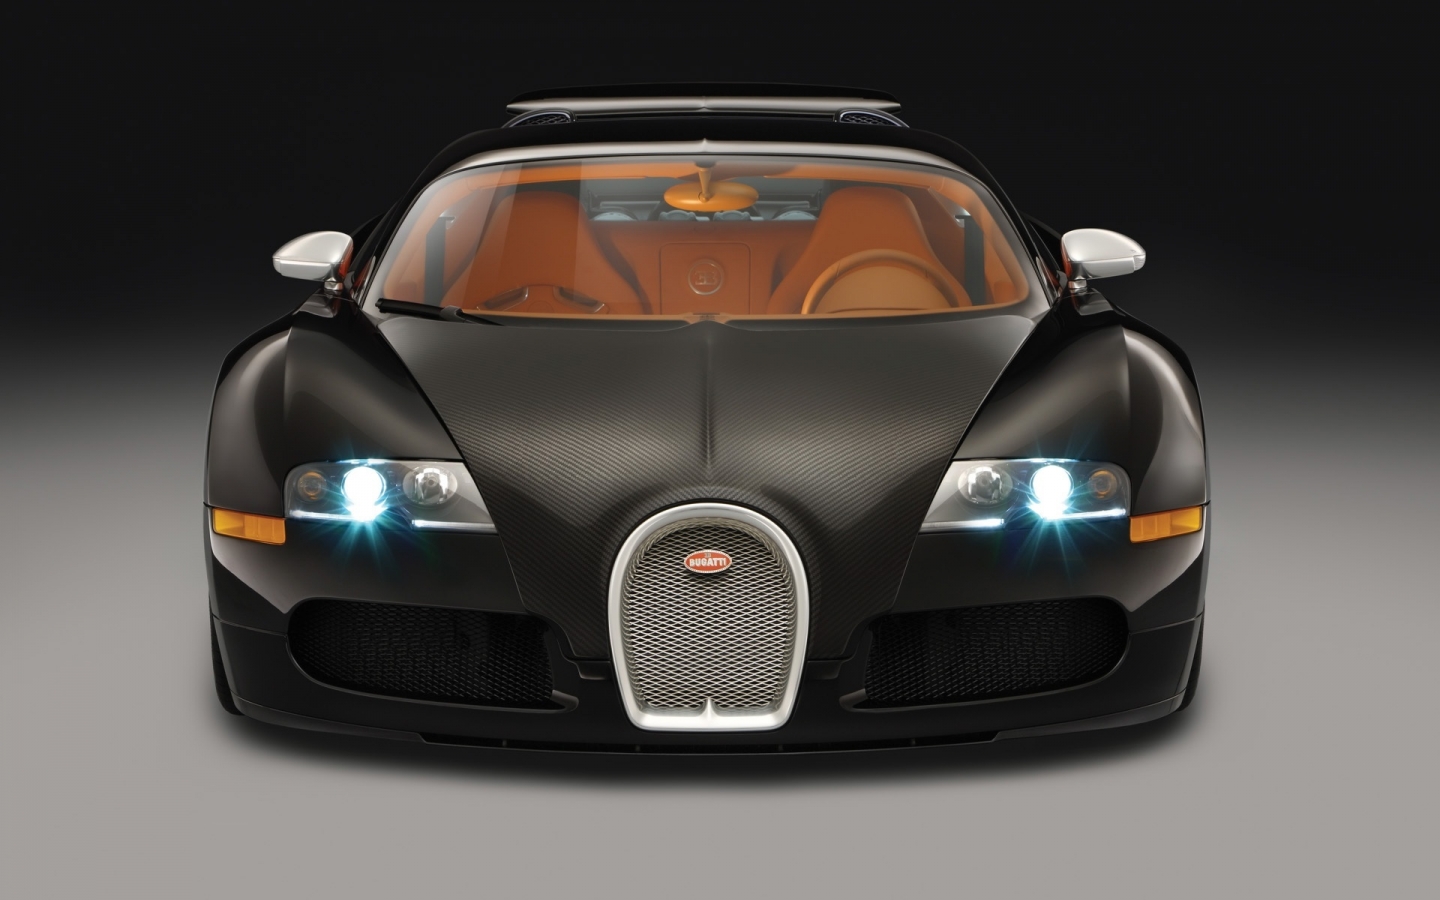 Bugatti Veyron Sang Noir 2008 - Front for 1440 x 900 widescreen resolution